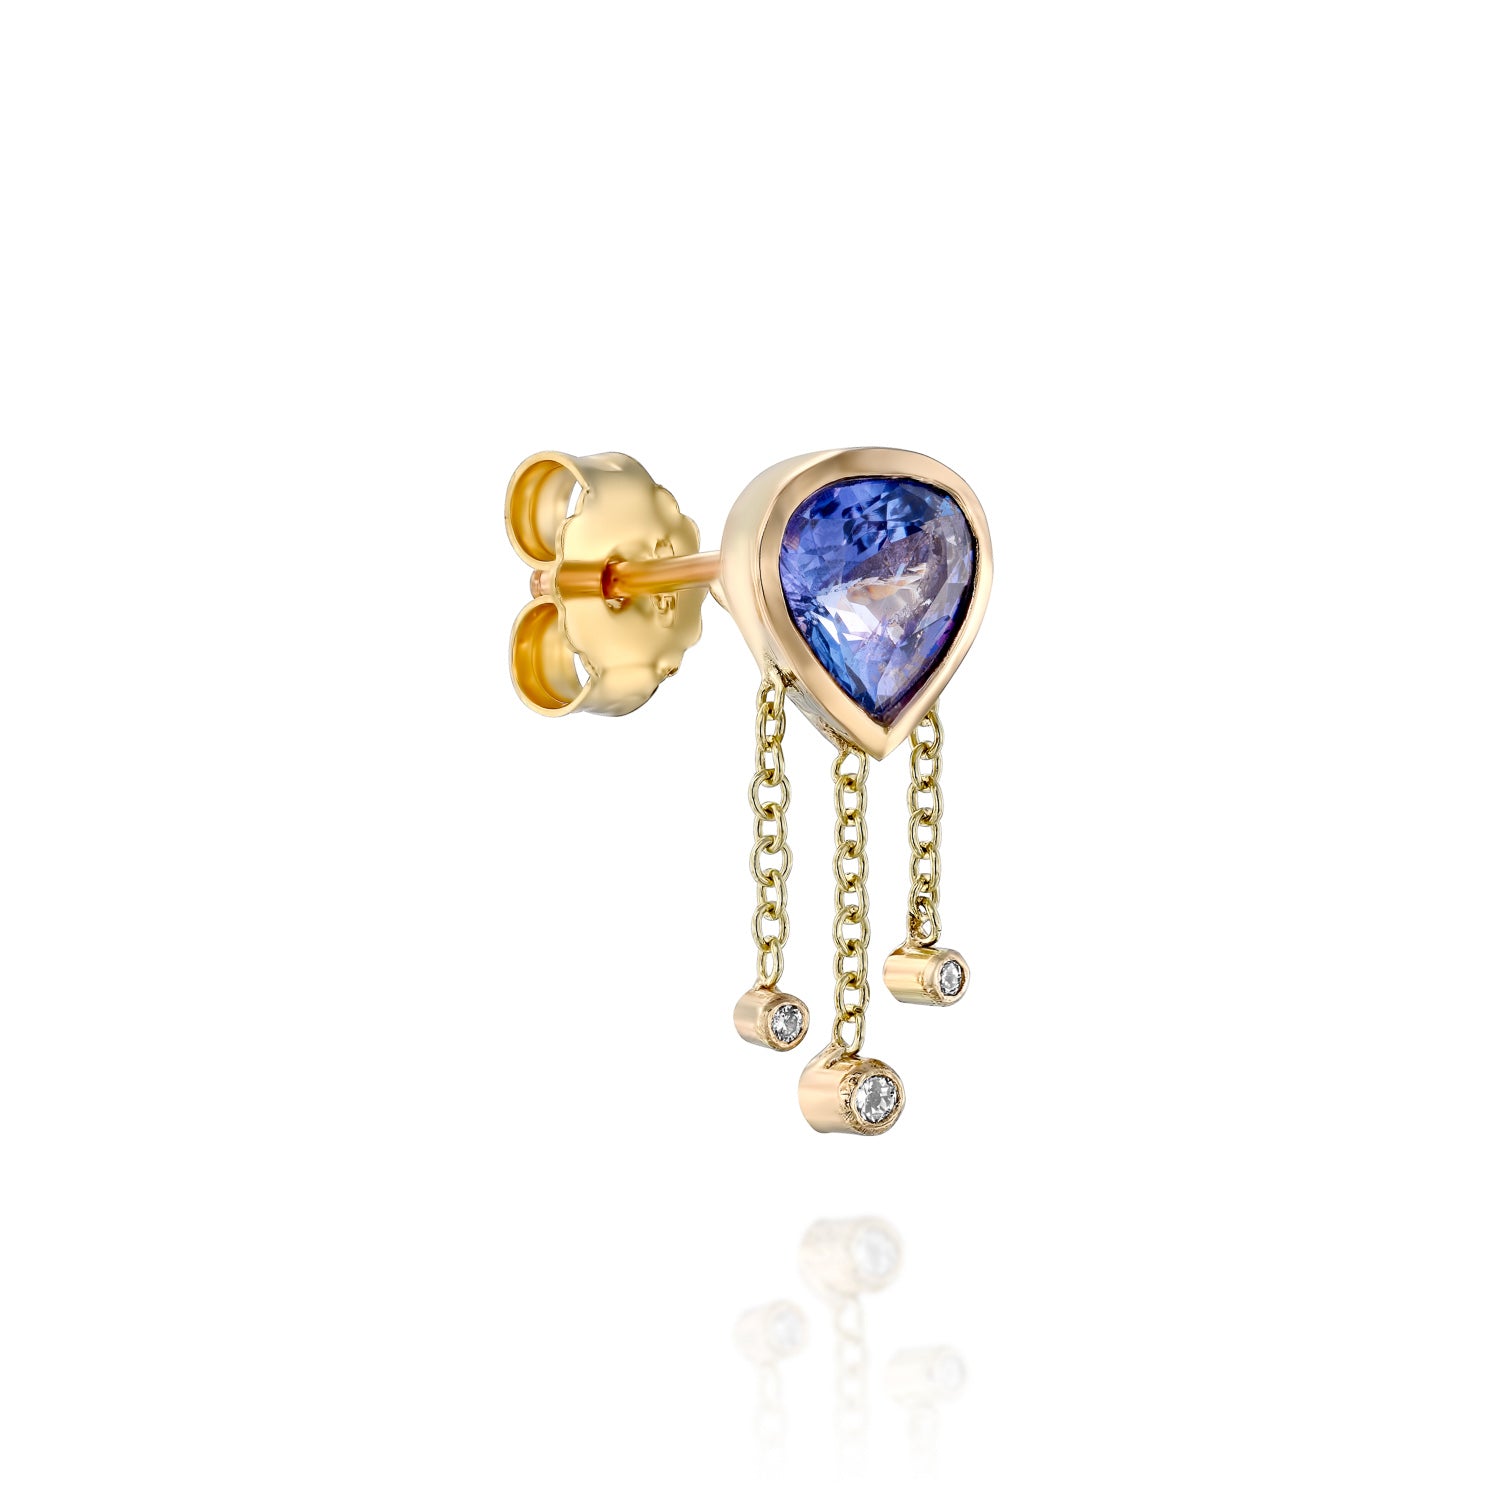 Bhagsu Earring &amp; Tanzanite  - one of a kind - Danielle Gerber Freedom Jewelry